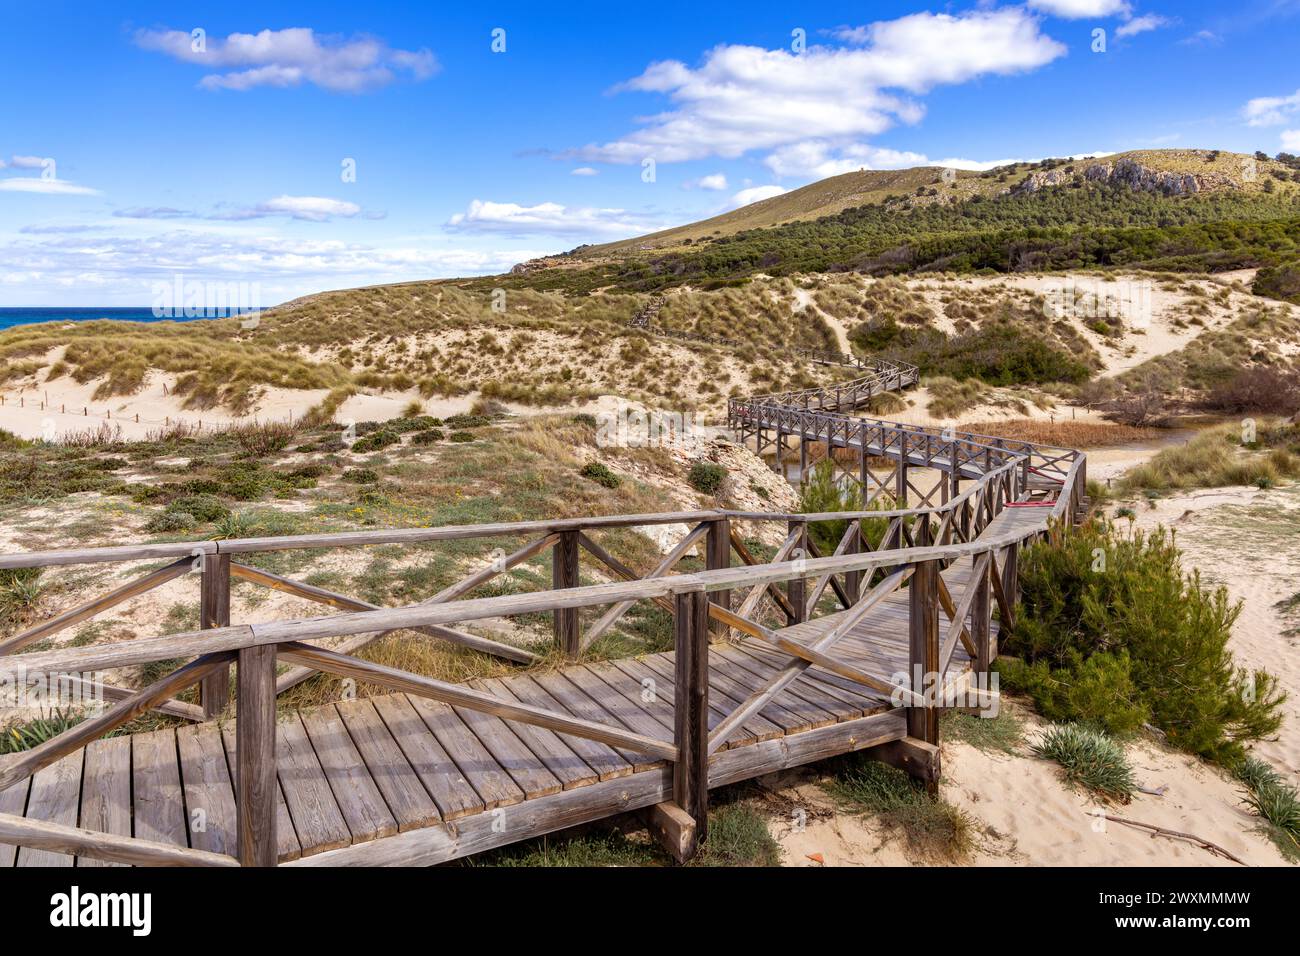 Wooden walkway through sand dunes at Cala Mesquida, Mallorca, Balearic Islands, Spain Stock Photo